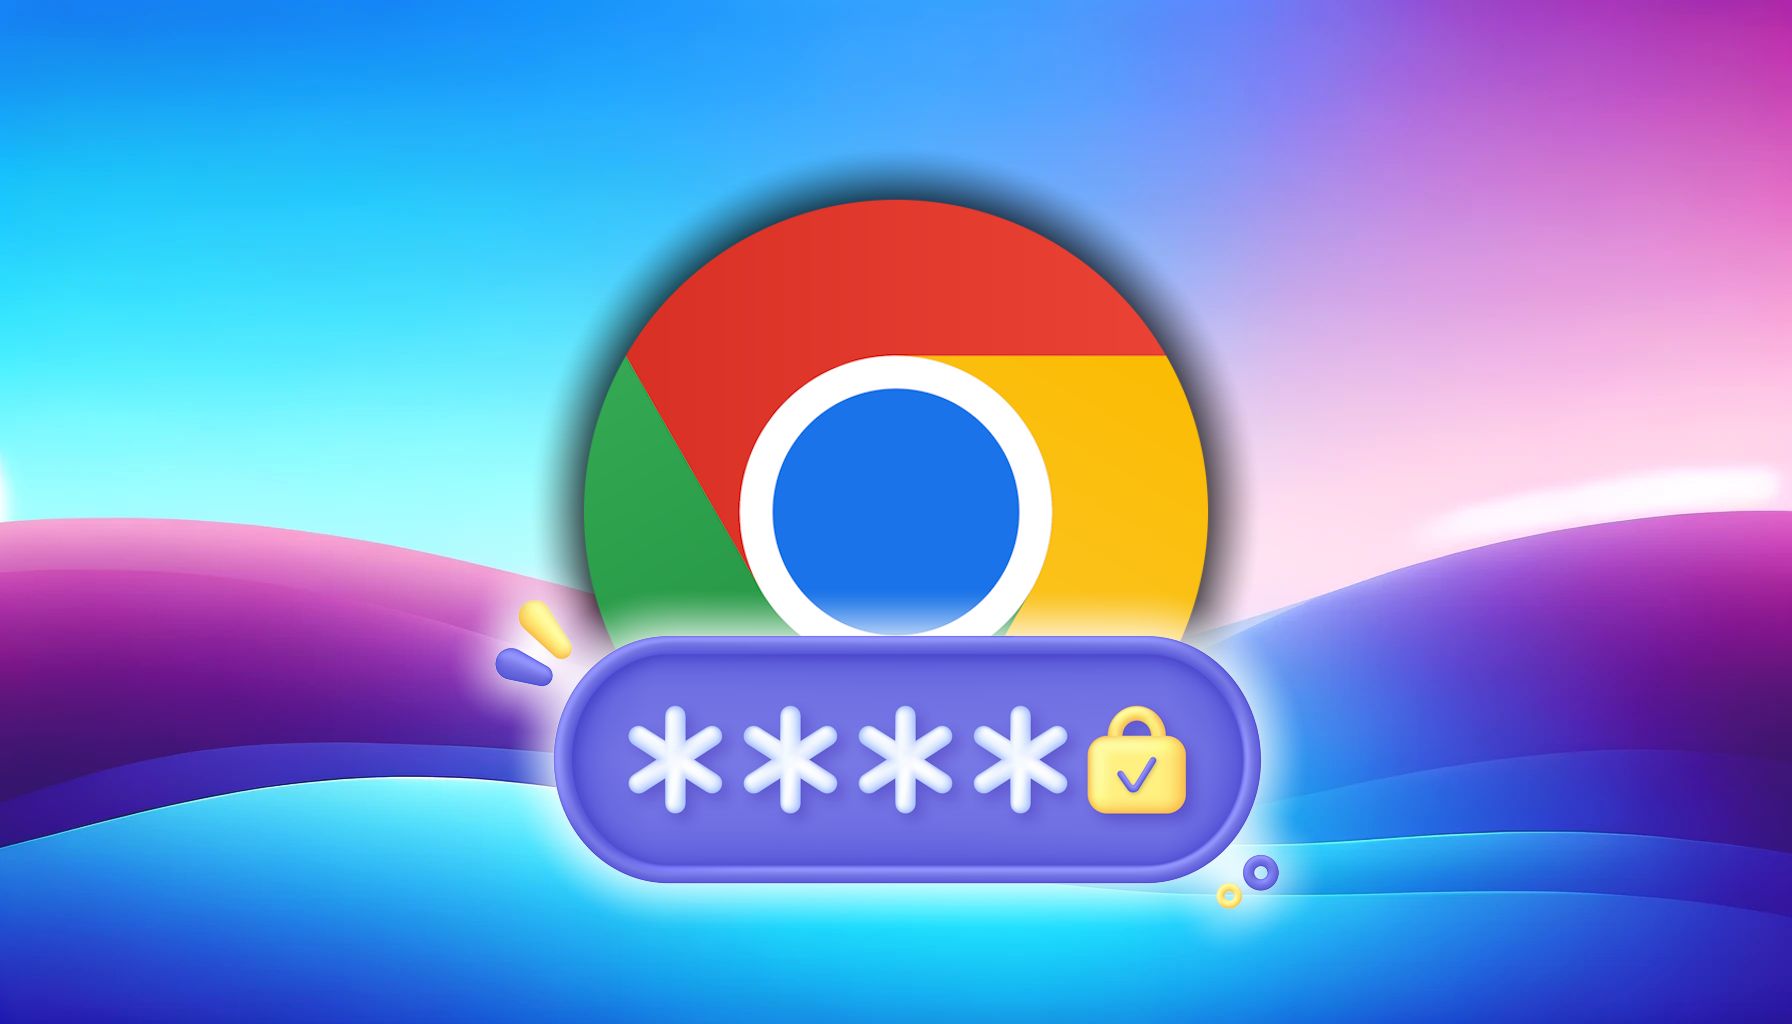 google chrome logo with password prompt